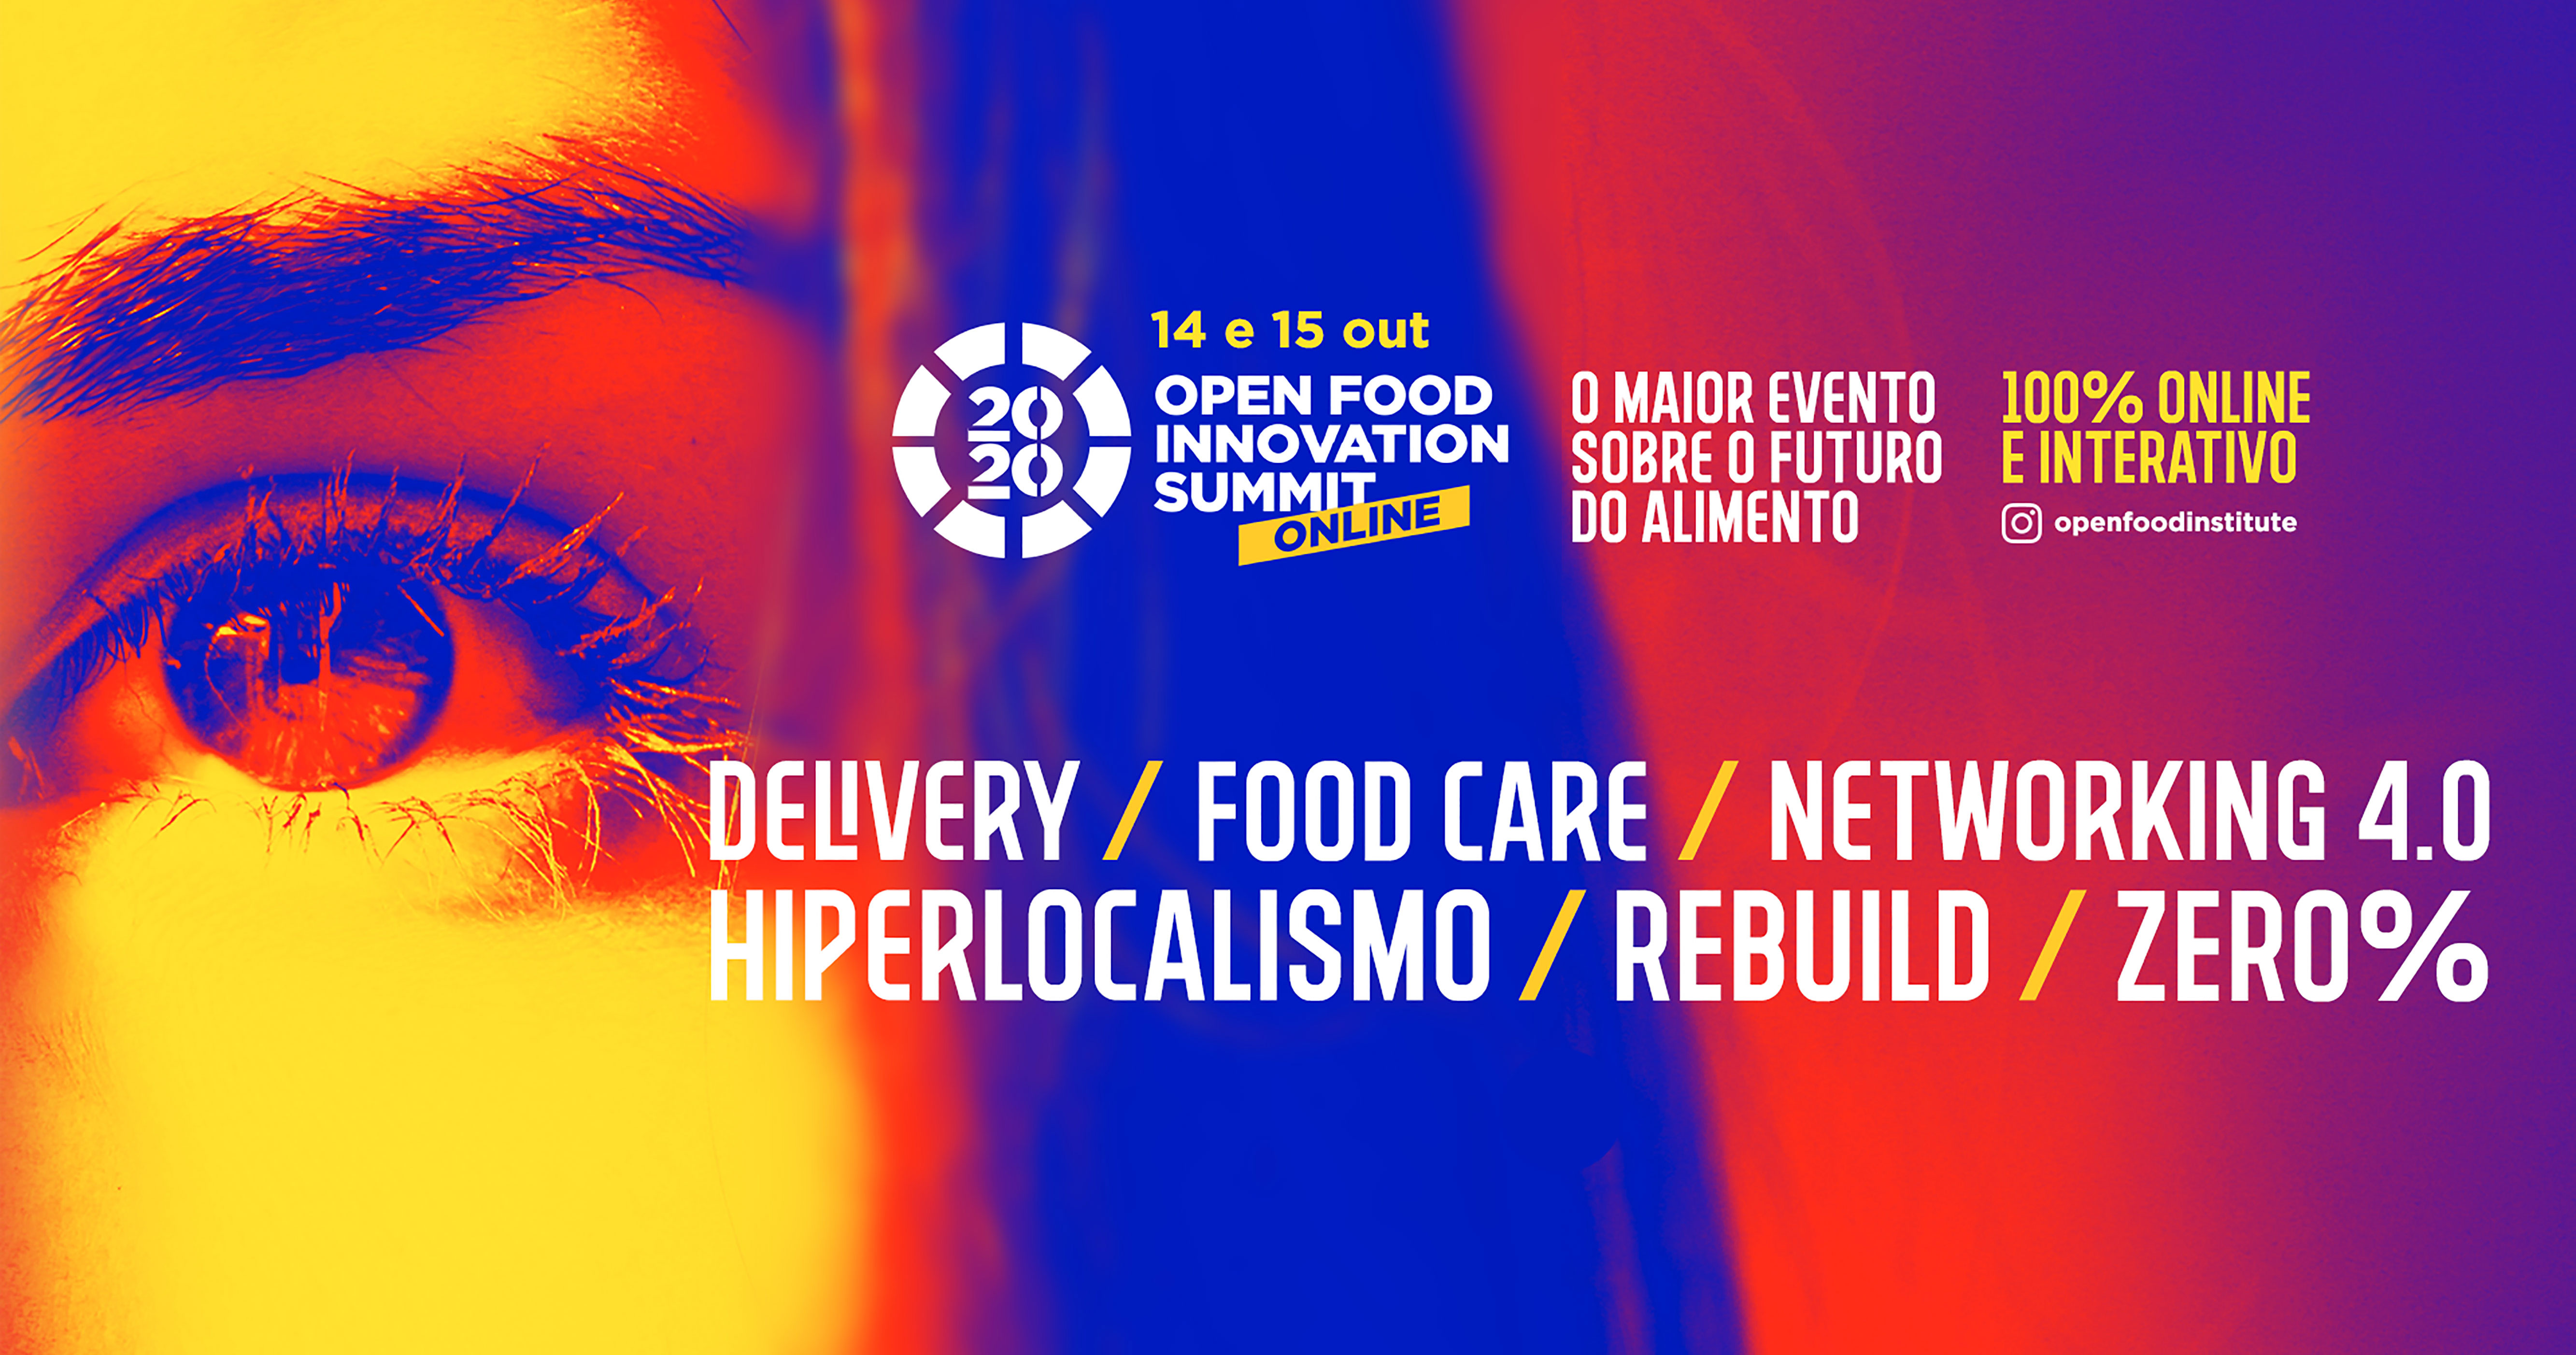 Open Food Innovation Summit será realizado em formato 100% digital e interativo